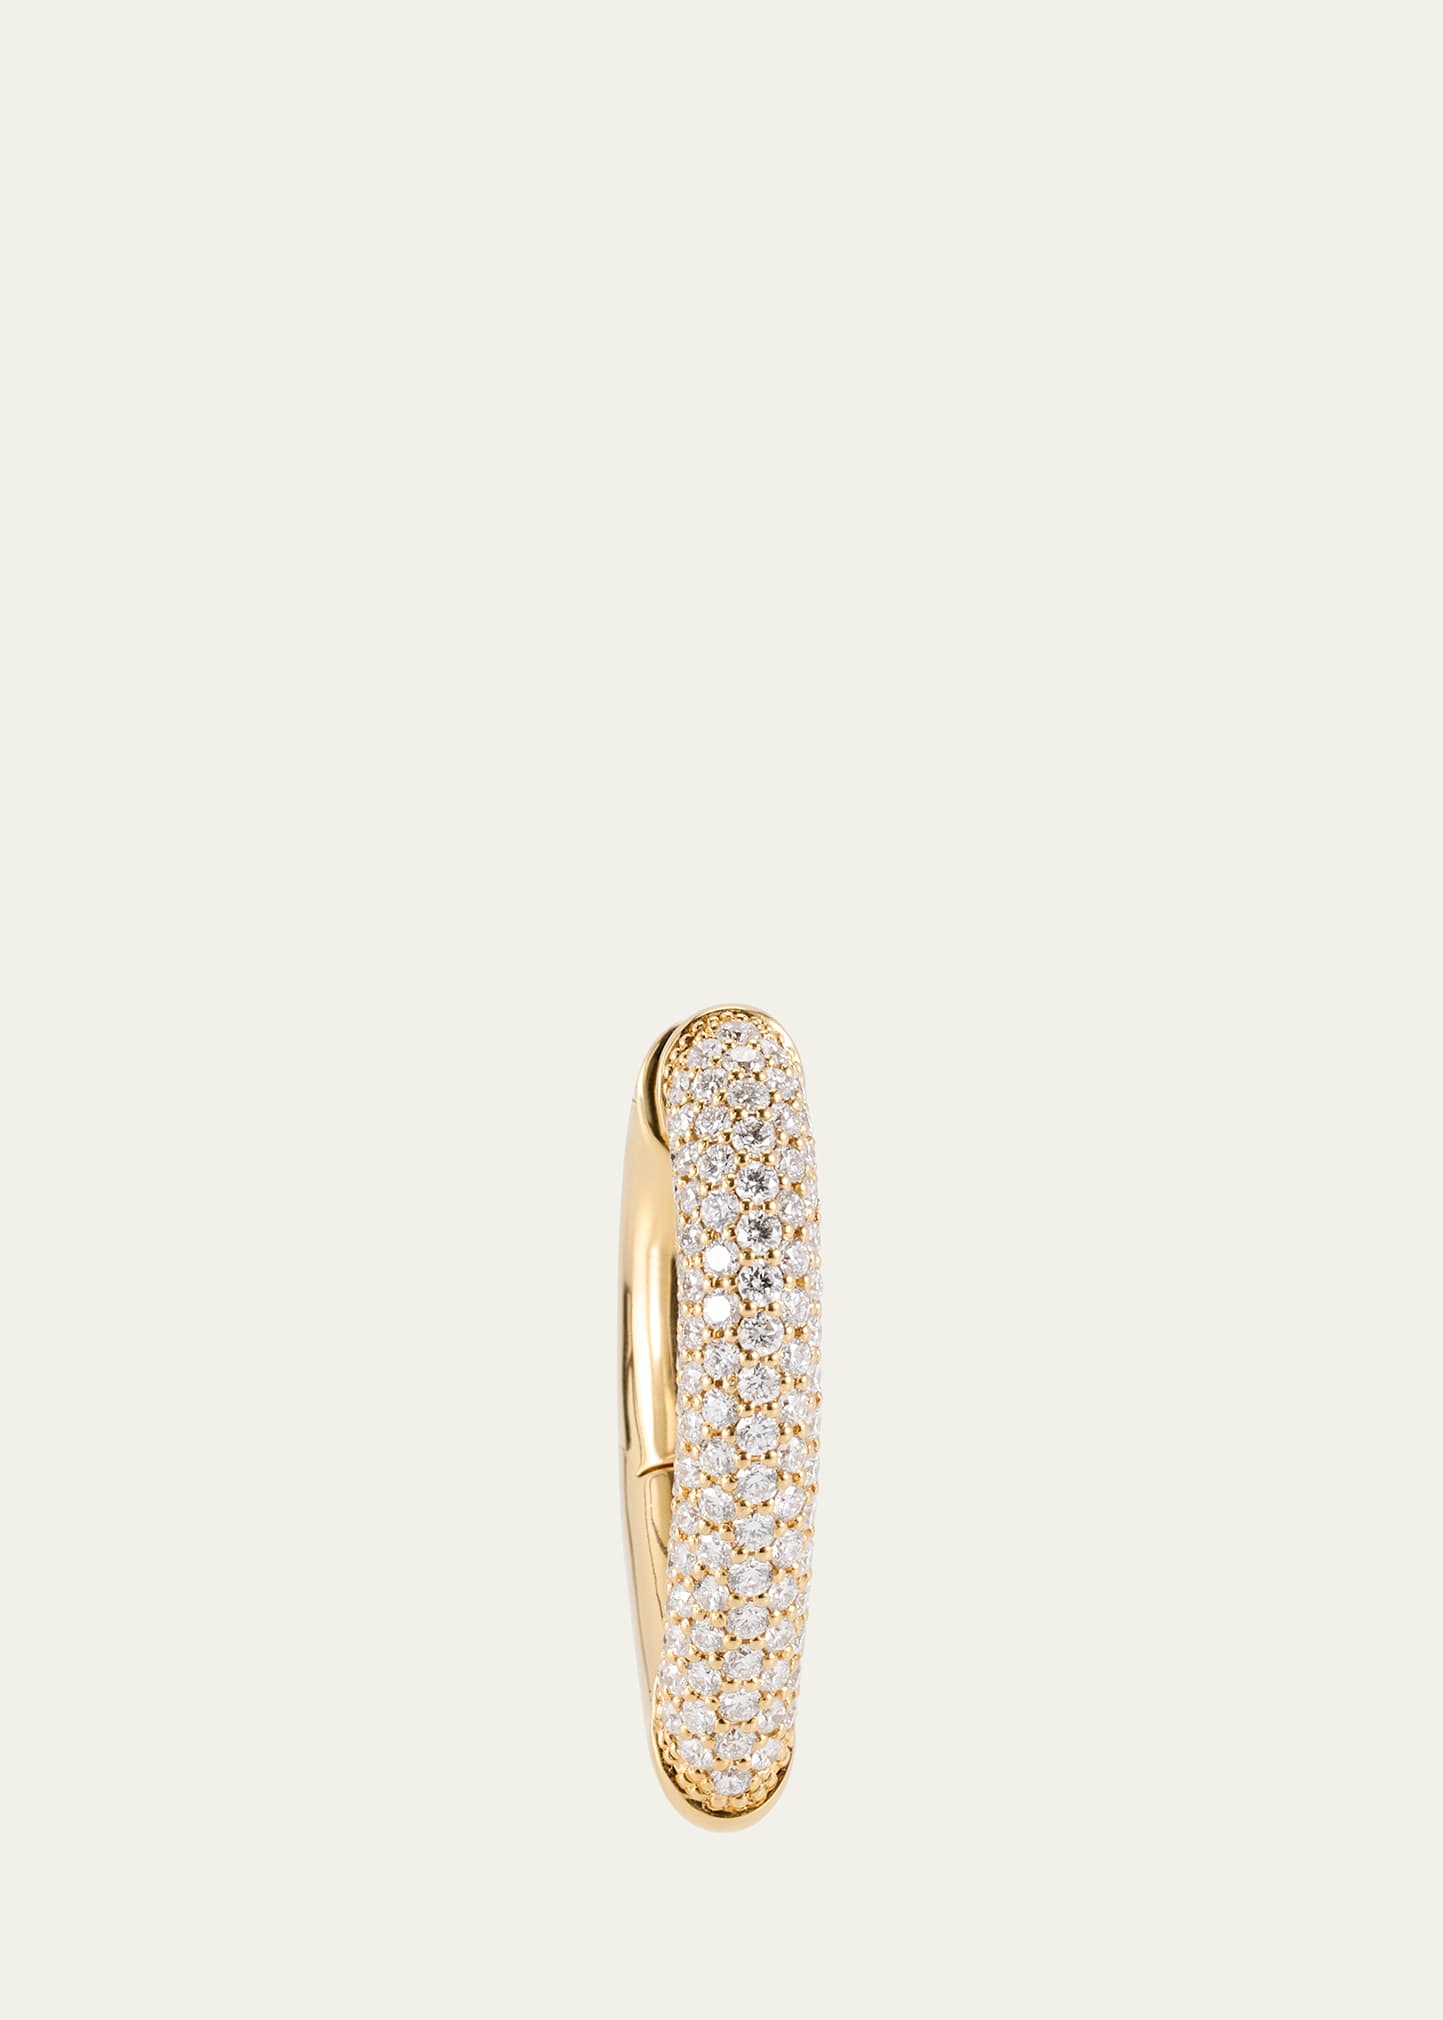 Engelbert 18k Yellow Gold Drop Link Earrings With Diamonds. 25mm